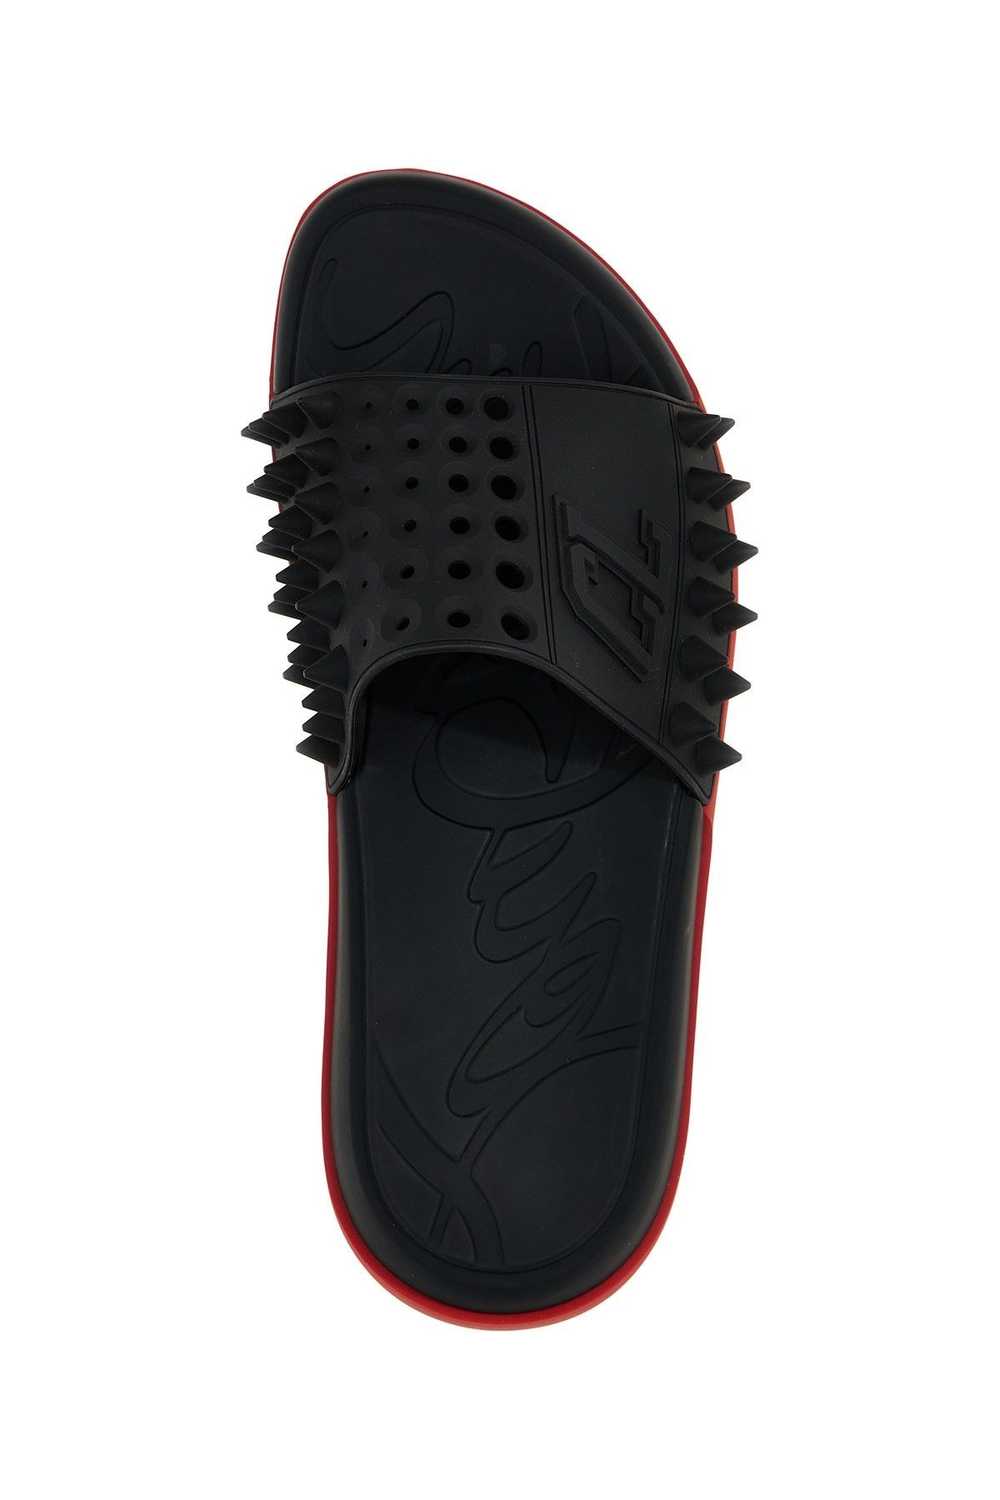 Christian Louboutin 'Take It Easy' sandals - image 3